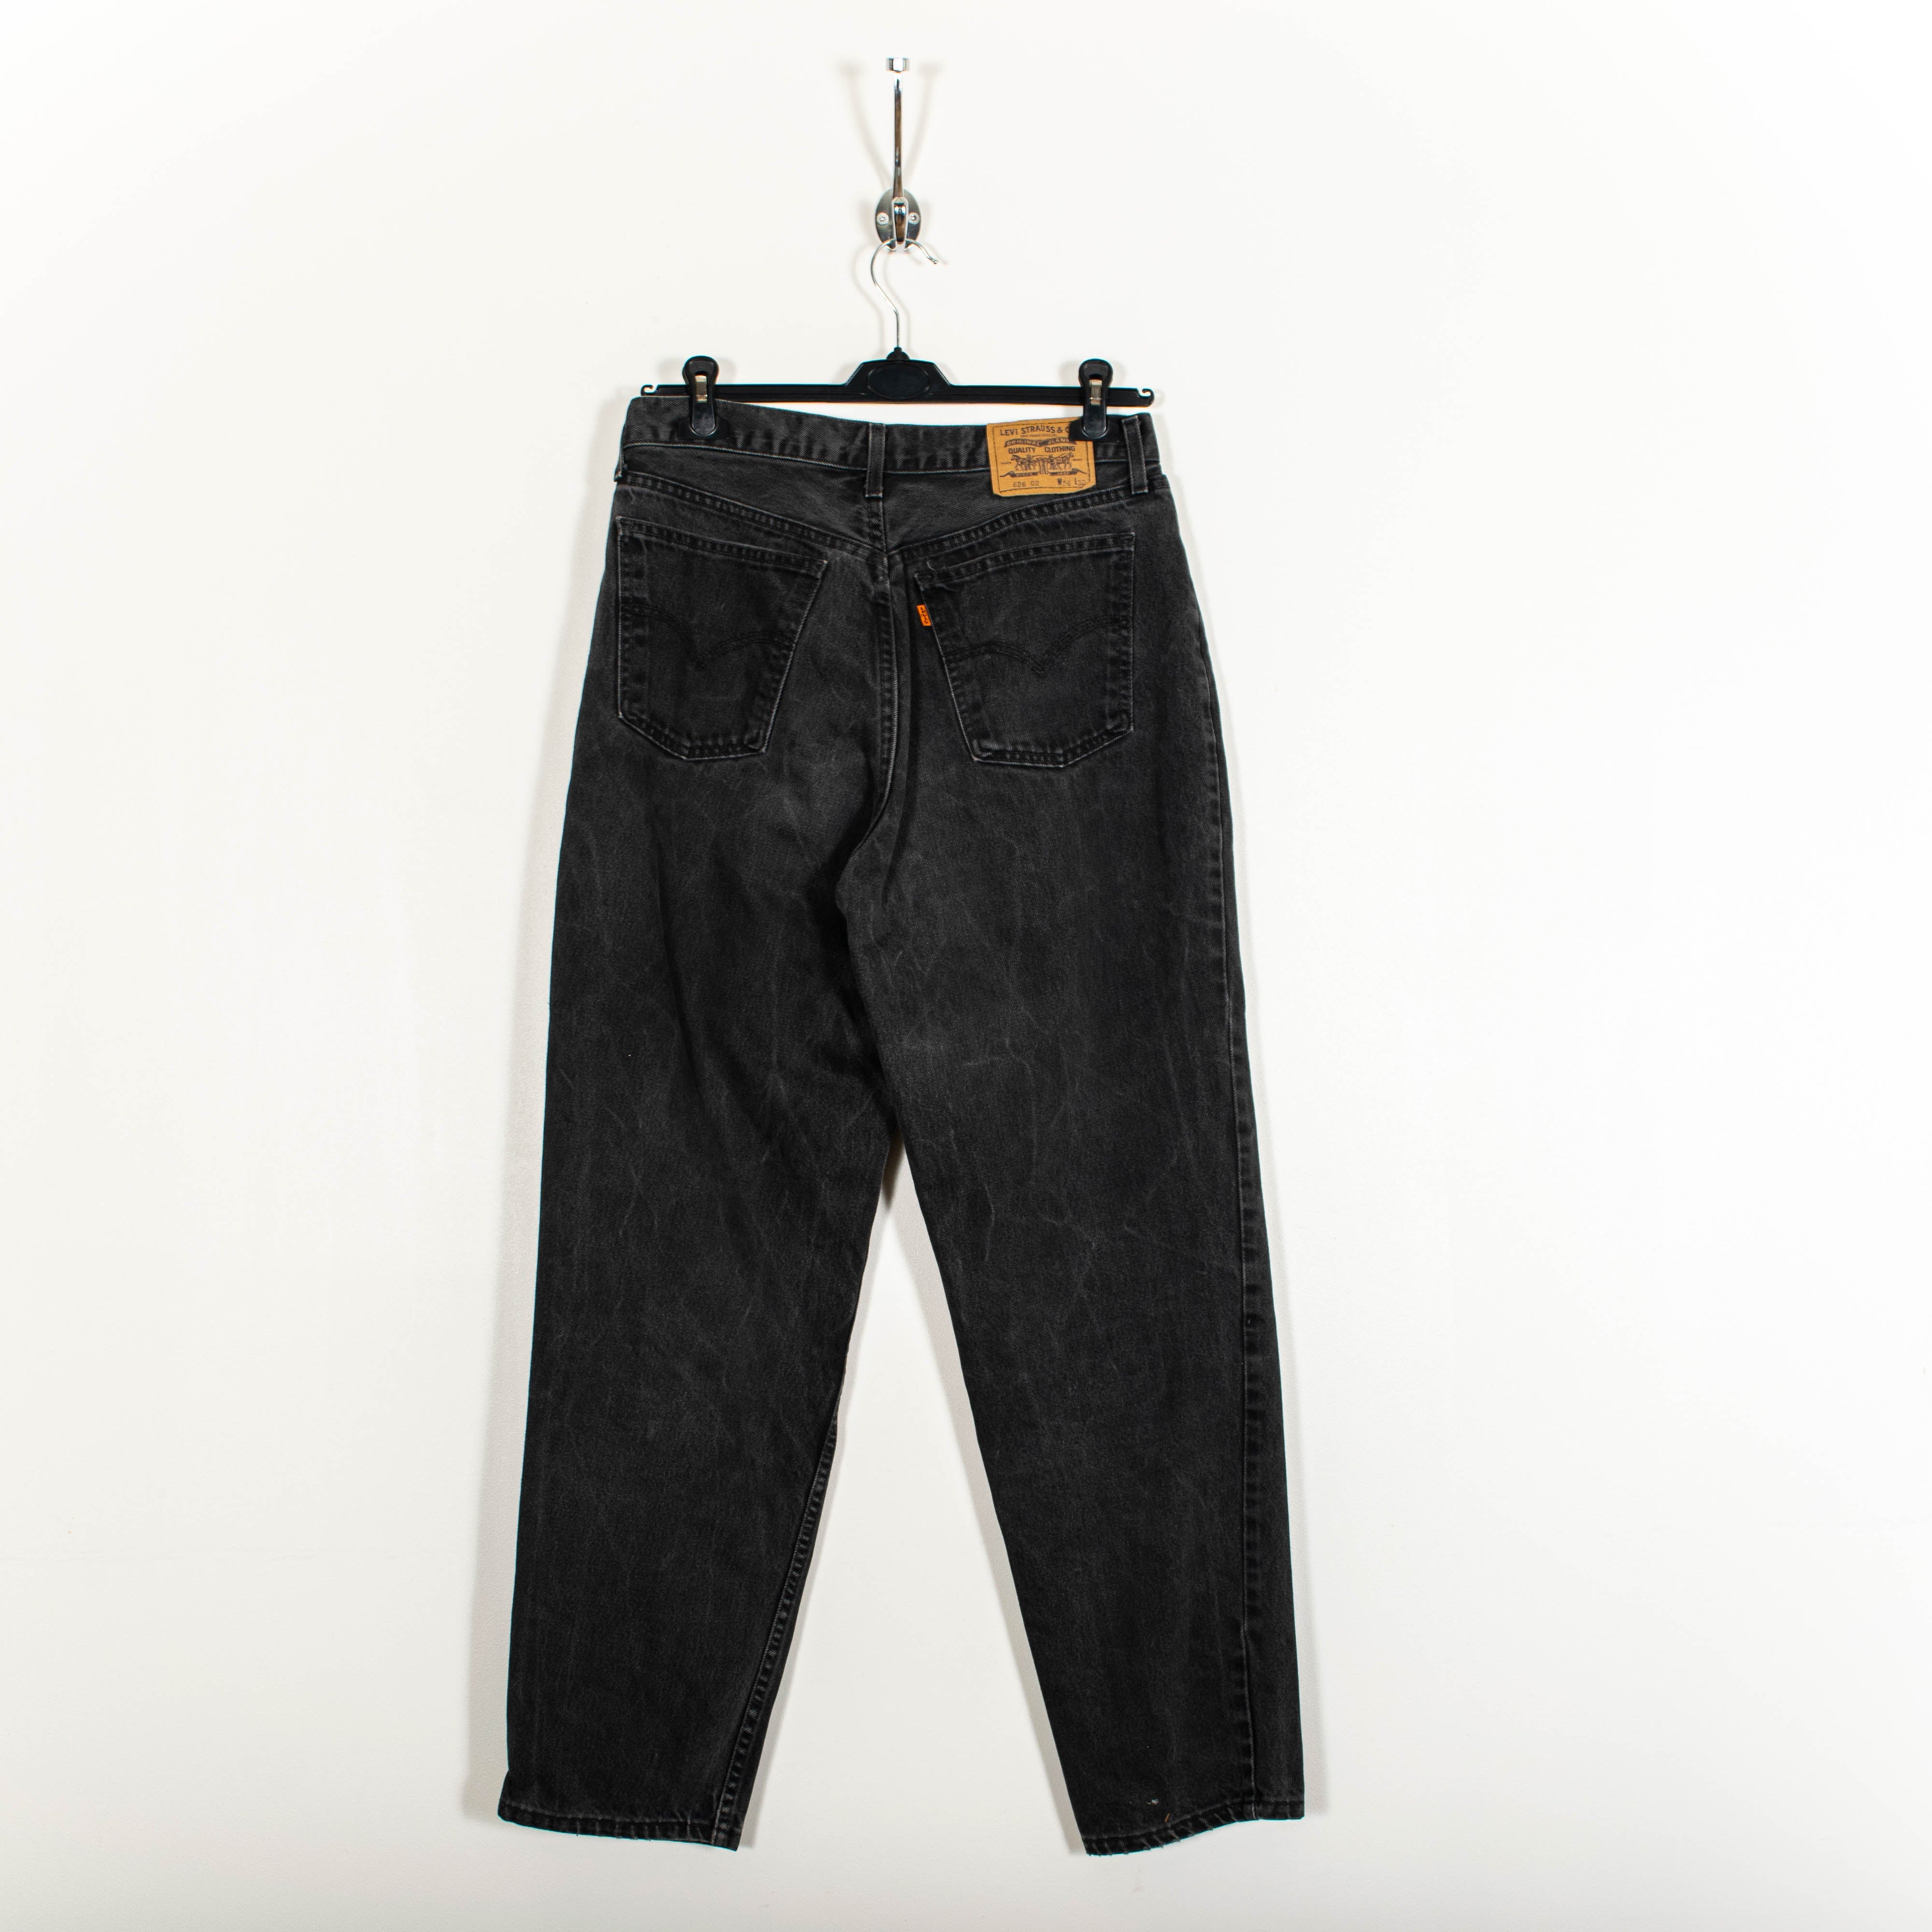 Vintage Levis 626 Black Washed Straight Fit Jeans Mens US32